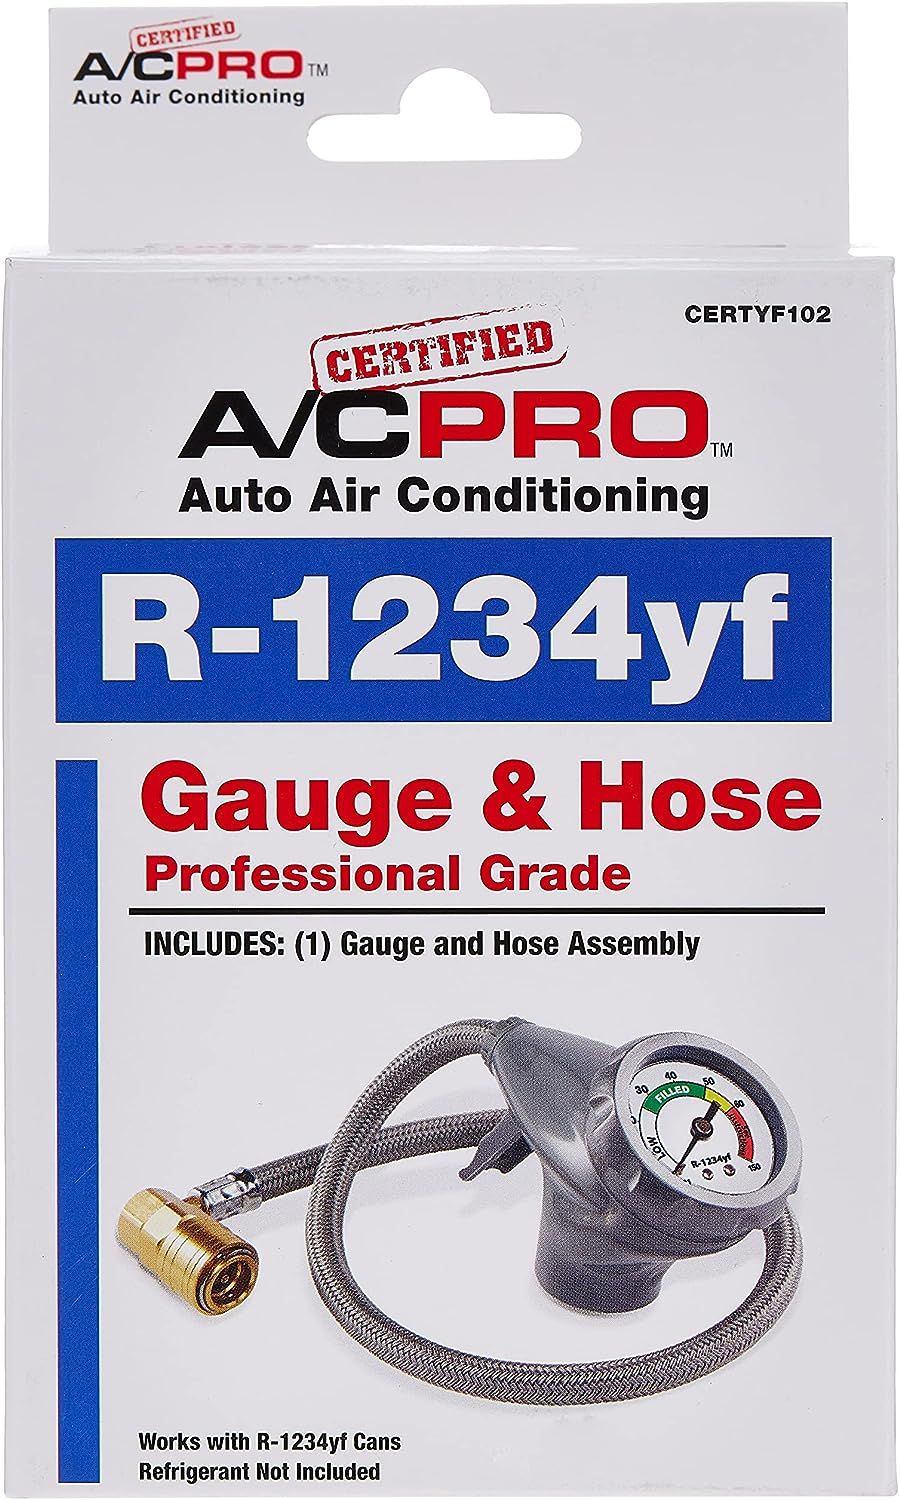  InterDynamics Certified AC Pro Car Air Conditioner